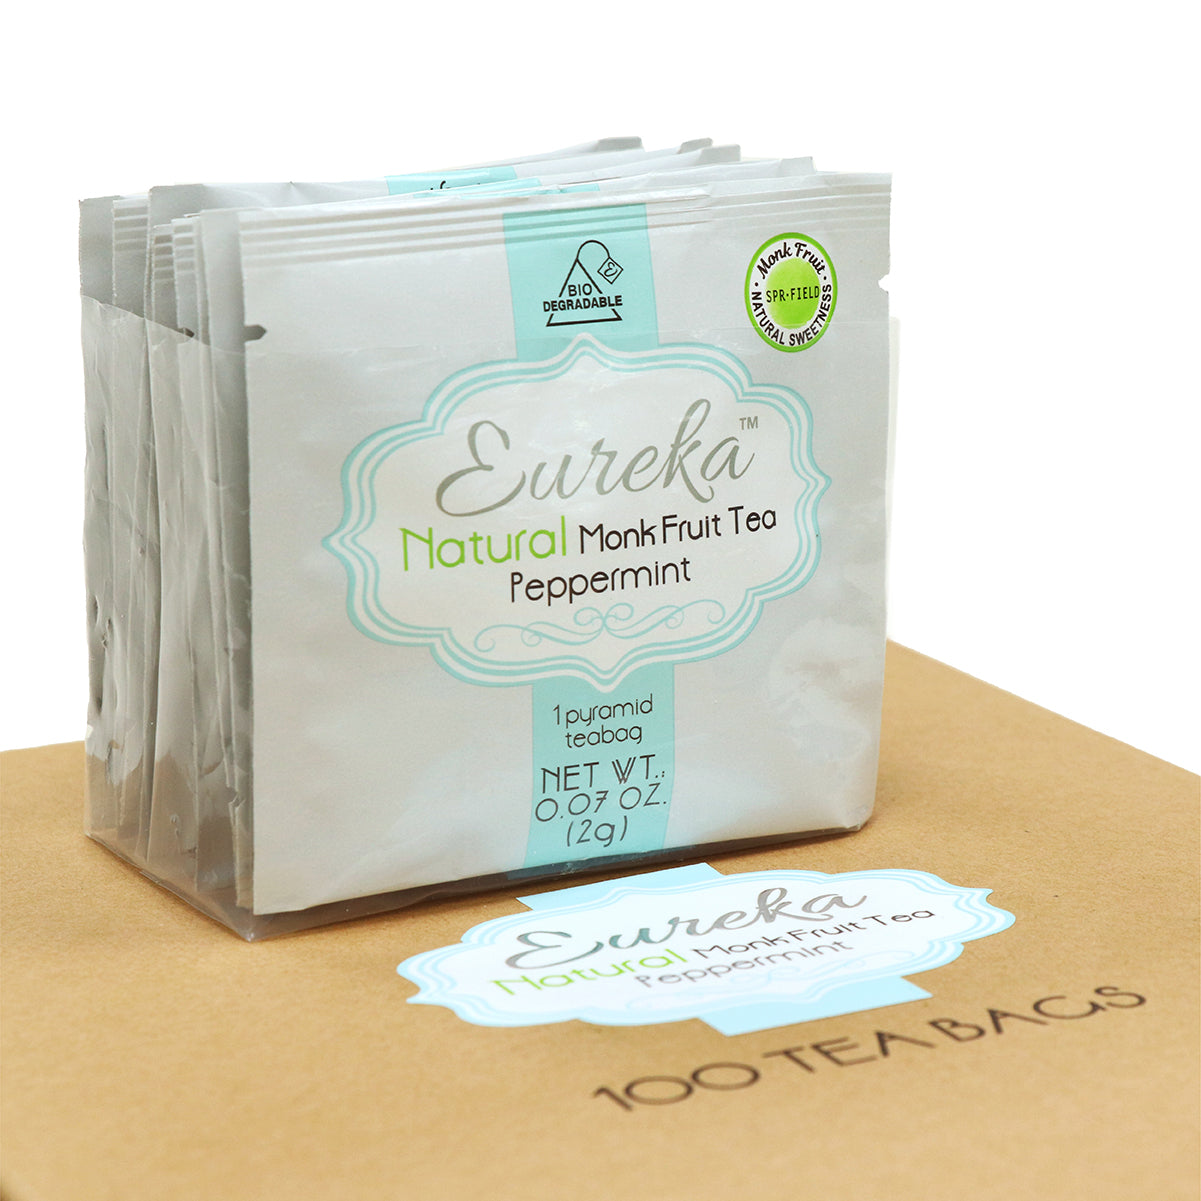 EUREKA Natural Monk Fruit Peppermint Tea (Value pack - 100pc)